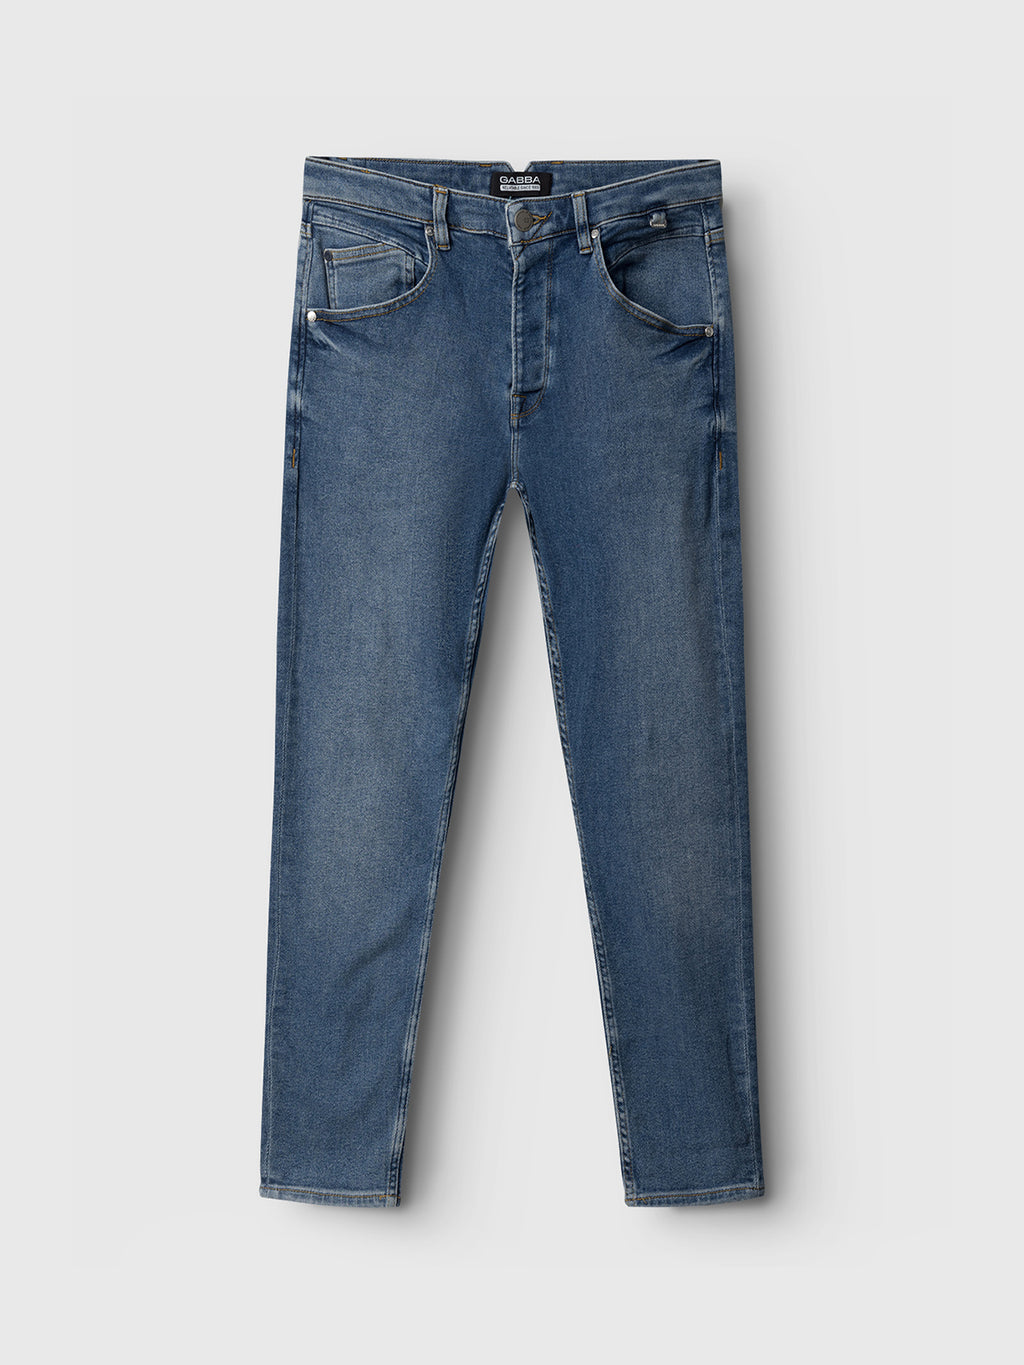 Alex K3948 Jeans - Denim wash